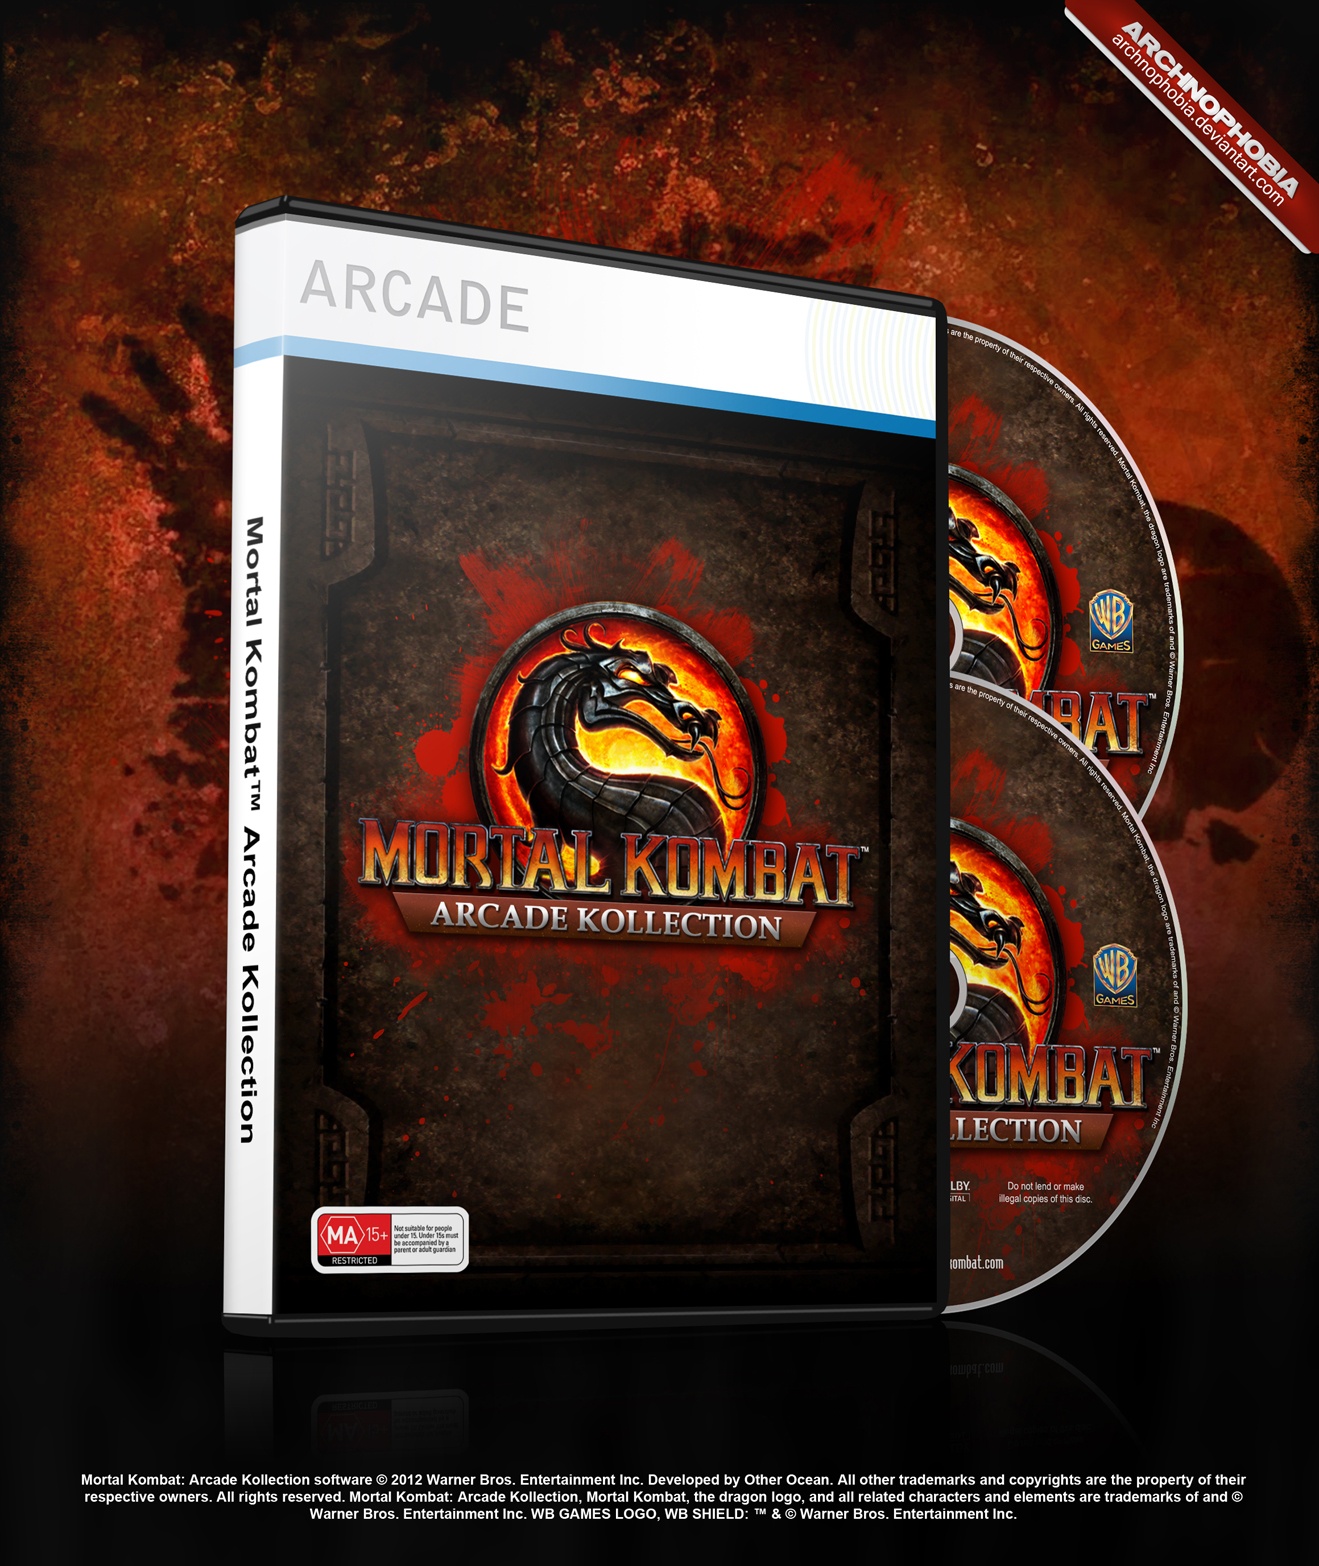 Mortal Kombat Arcade Kollection box cover